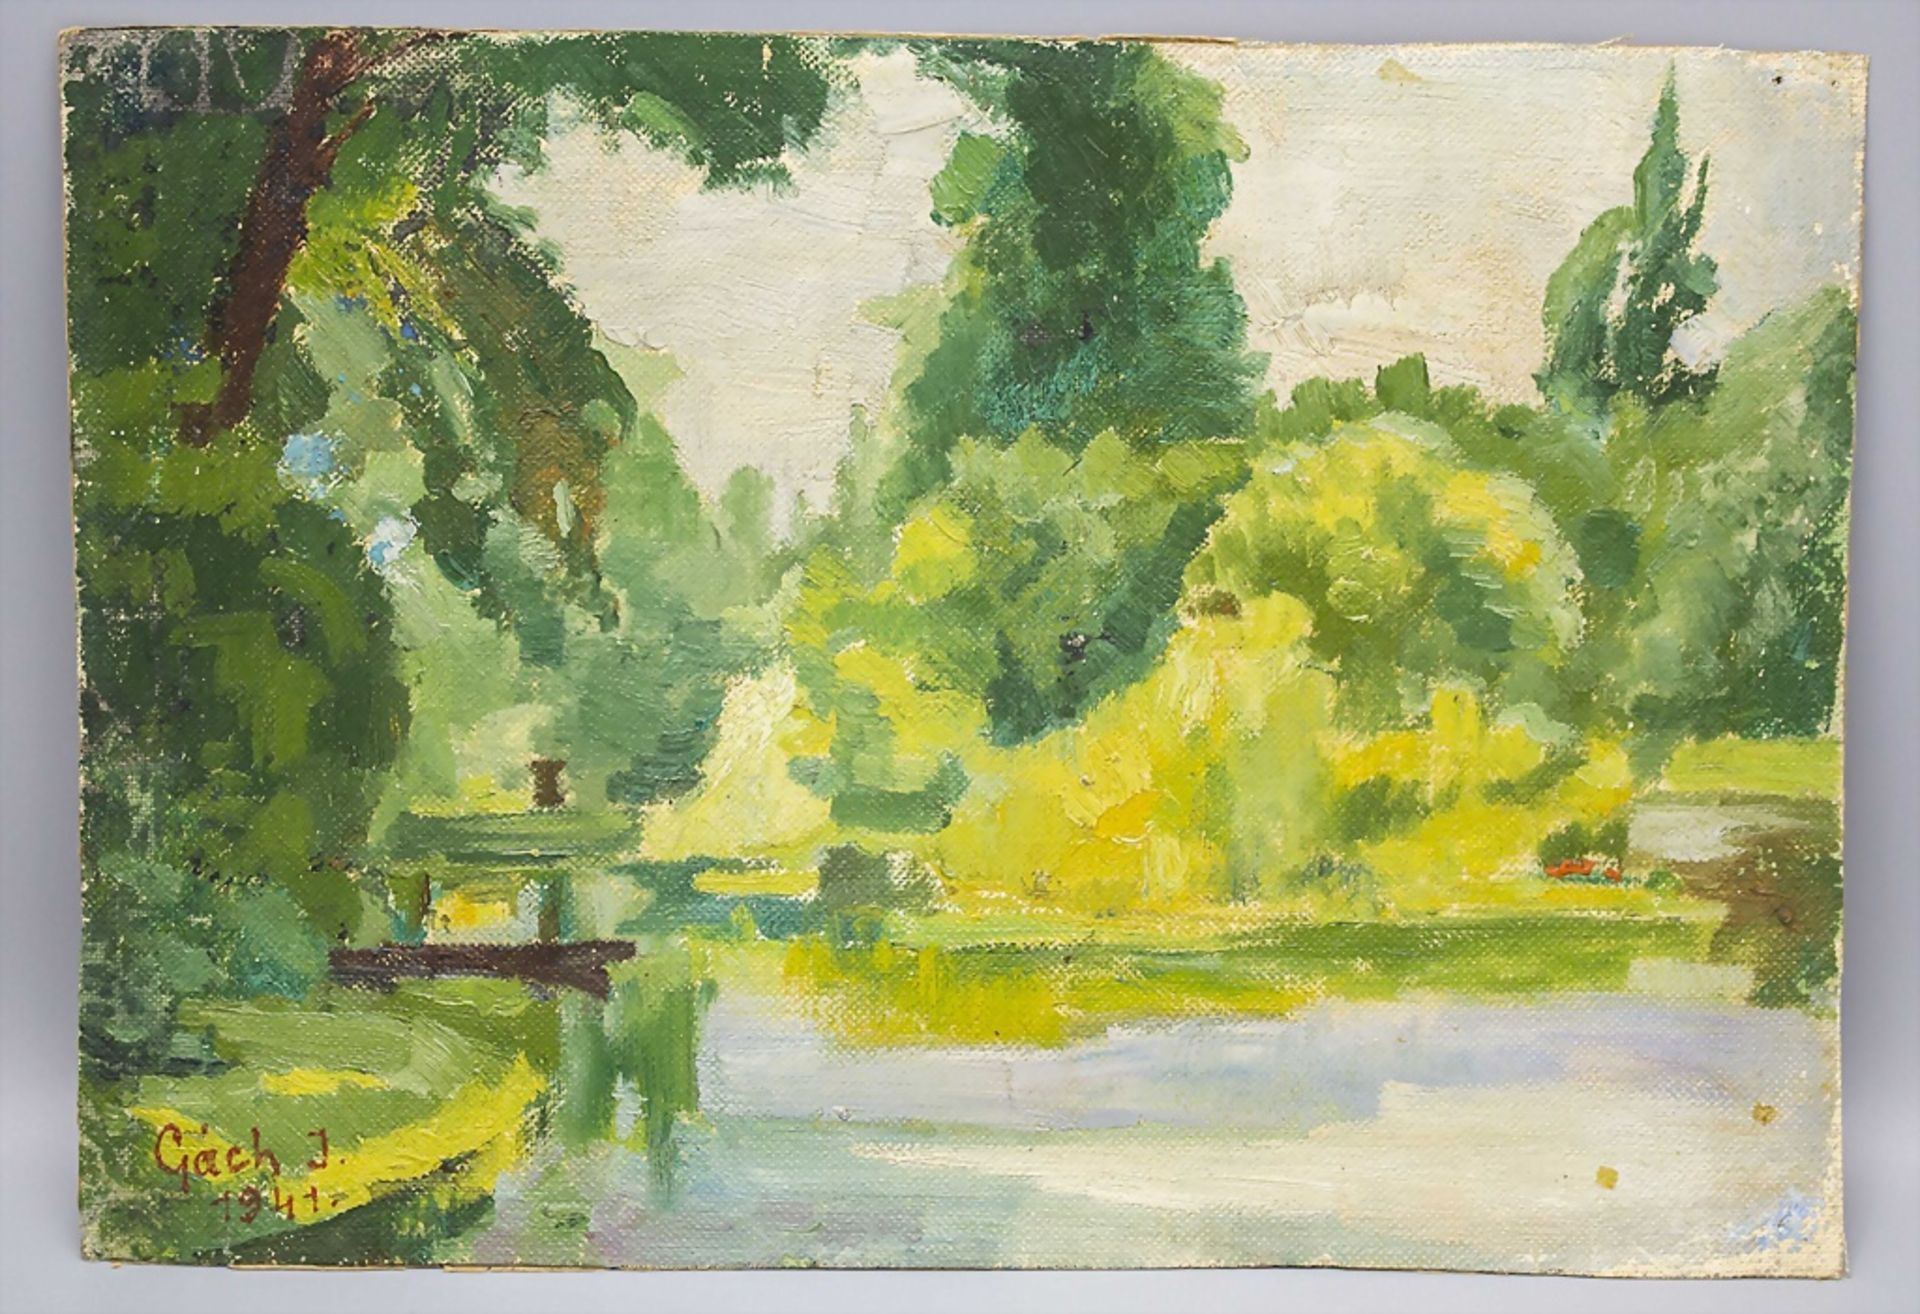 István Lipót GÁCH (1880-1962), 'See im Stadtpark' / 'Pond in city park', 1941